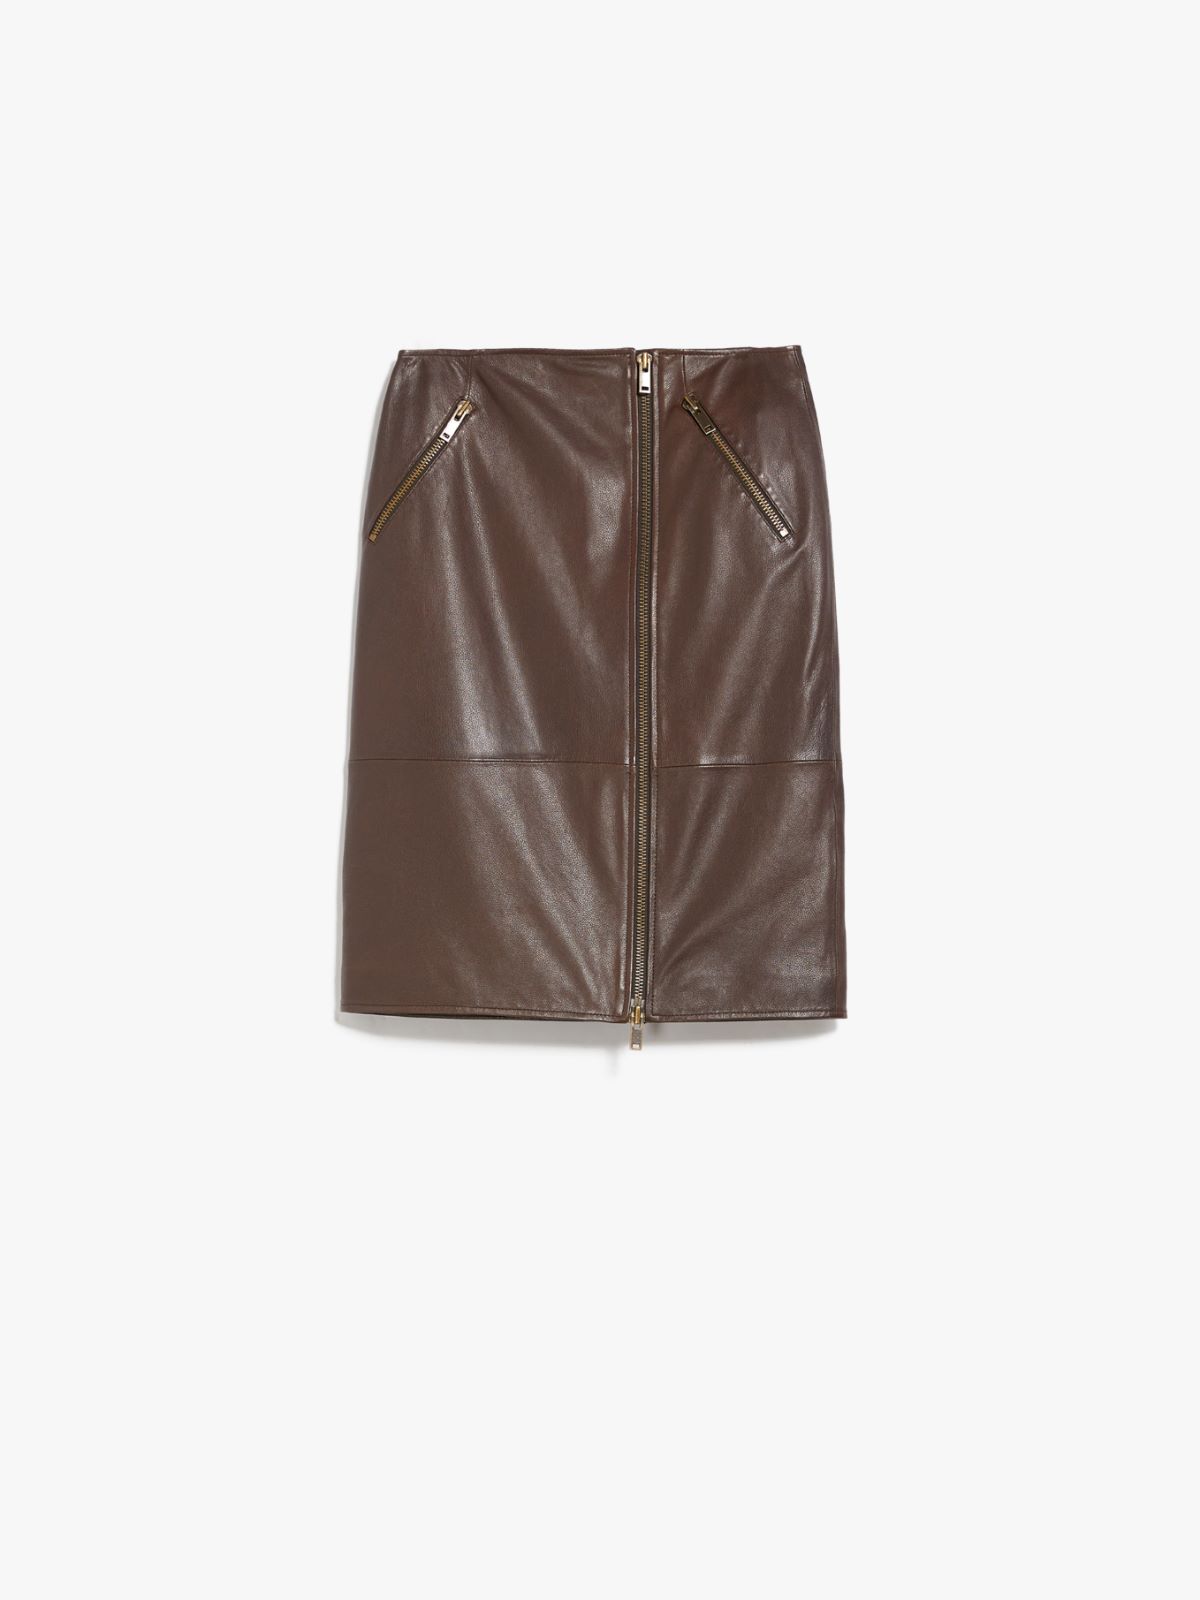 Nappa leather skirt - BROWN - Weekend Max Mara - 5